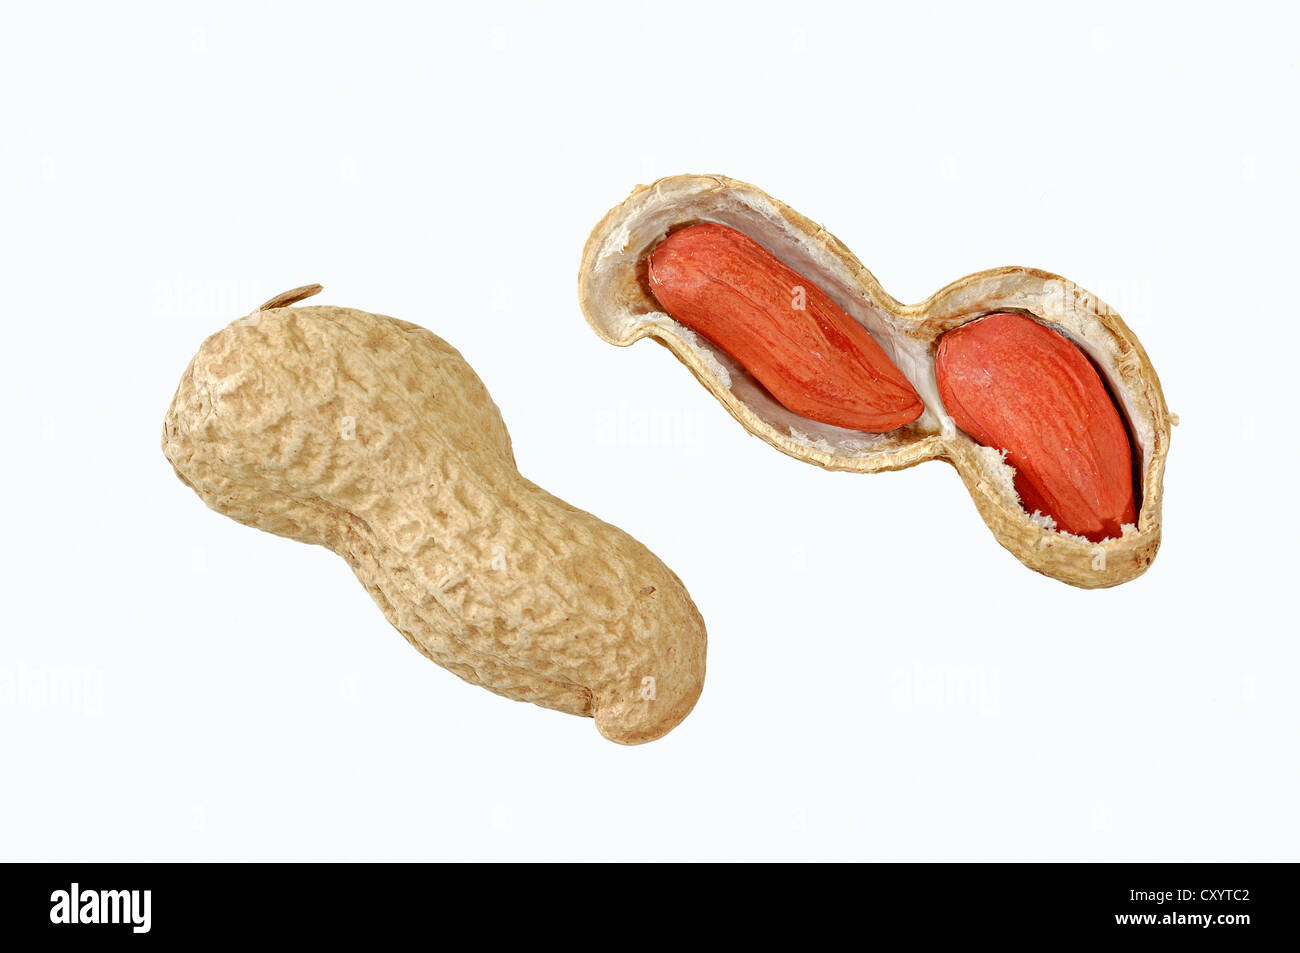 Peanuts (Arachis hypogaea) Stock Photo